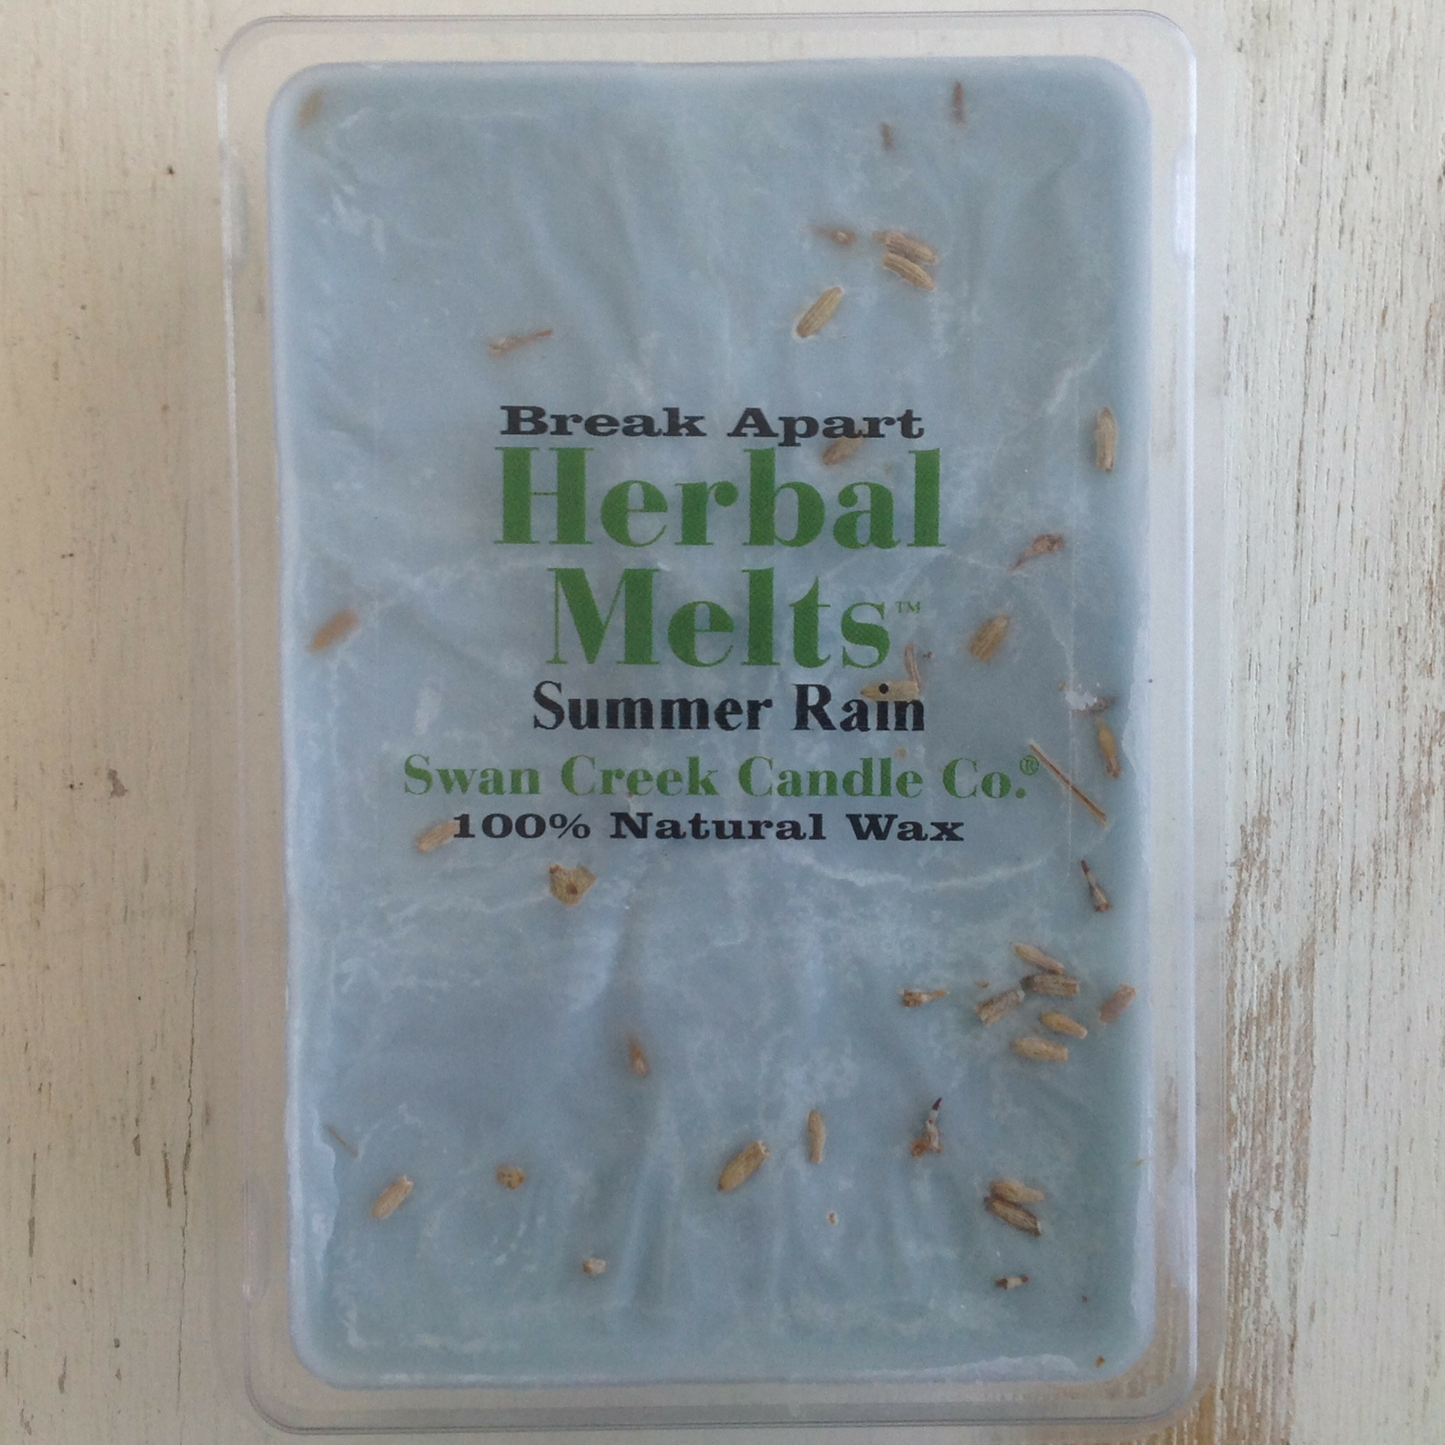 Summer Rain Herbal Melts